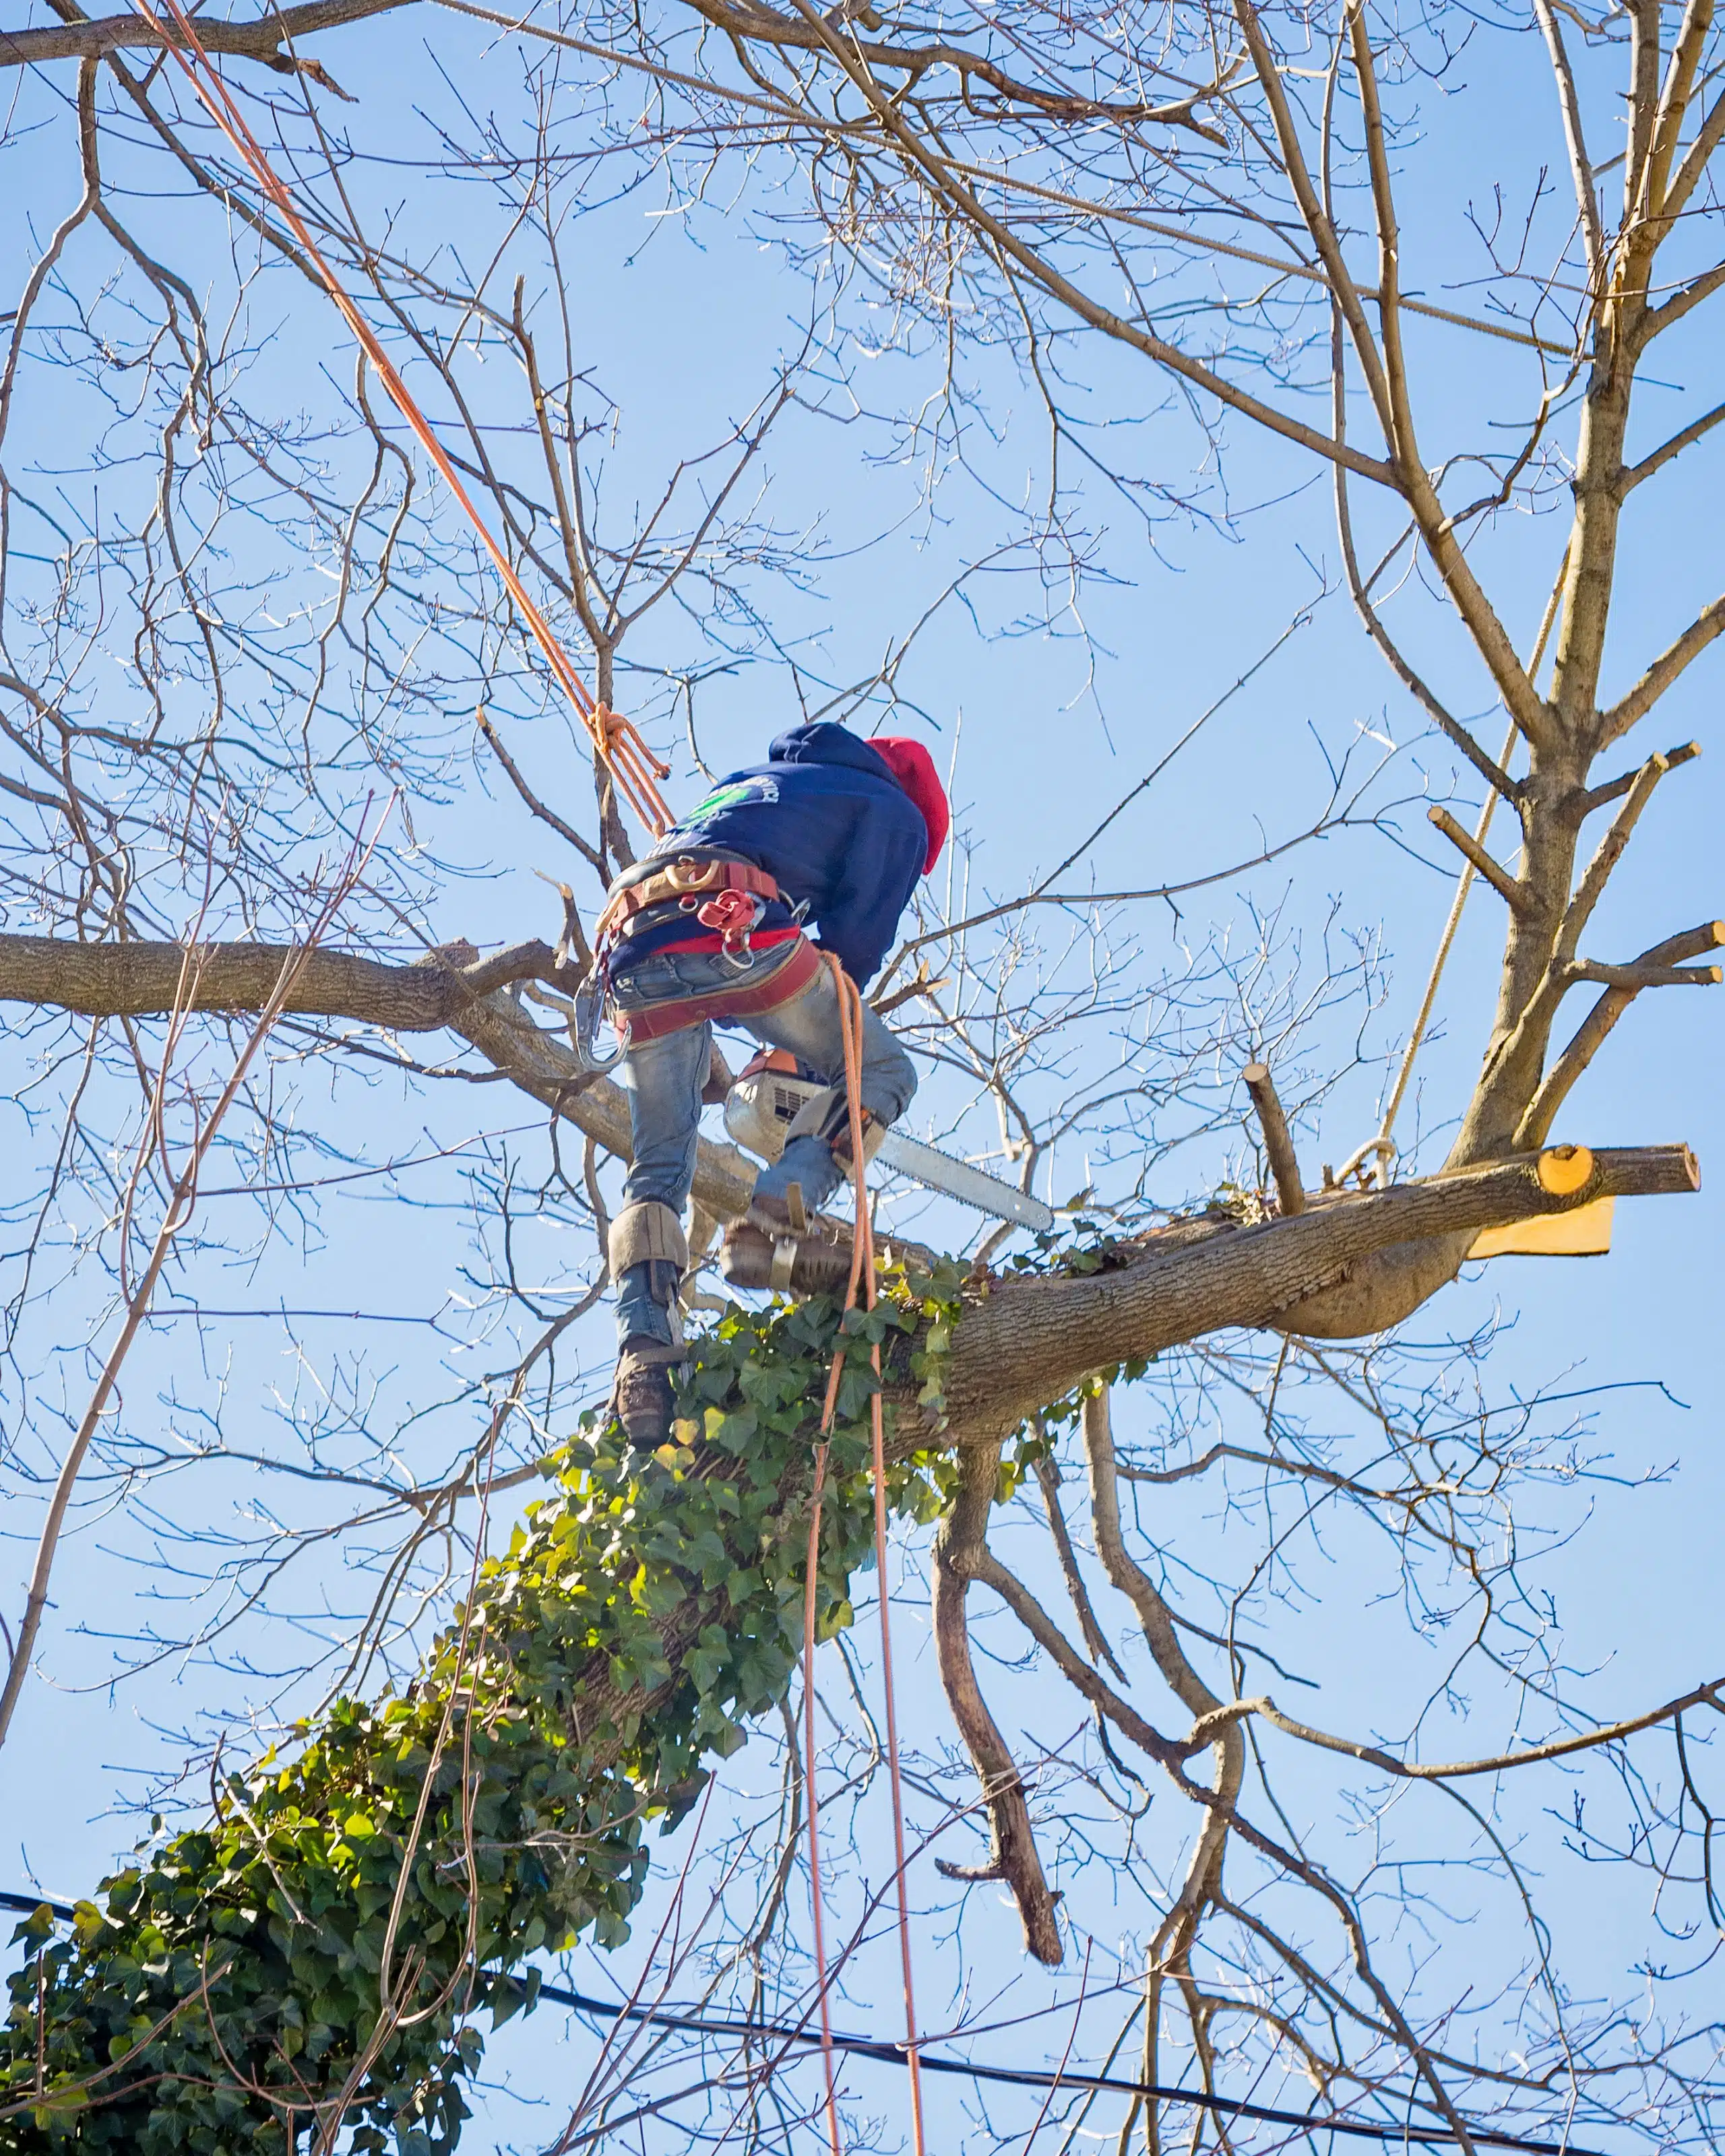 tree-service-worker-arborist-pruning-large-branche-2022-11-01-02-27-26-utc